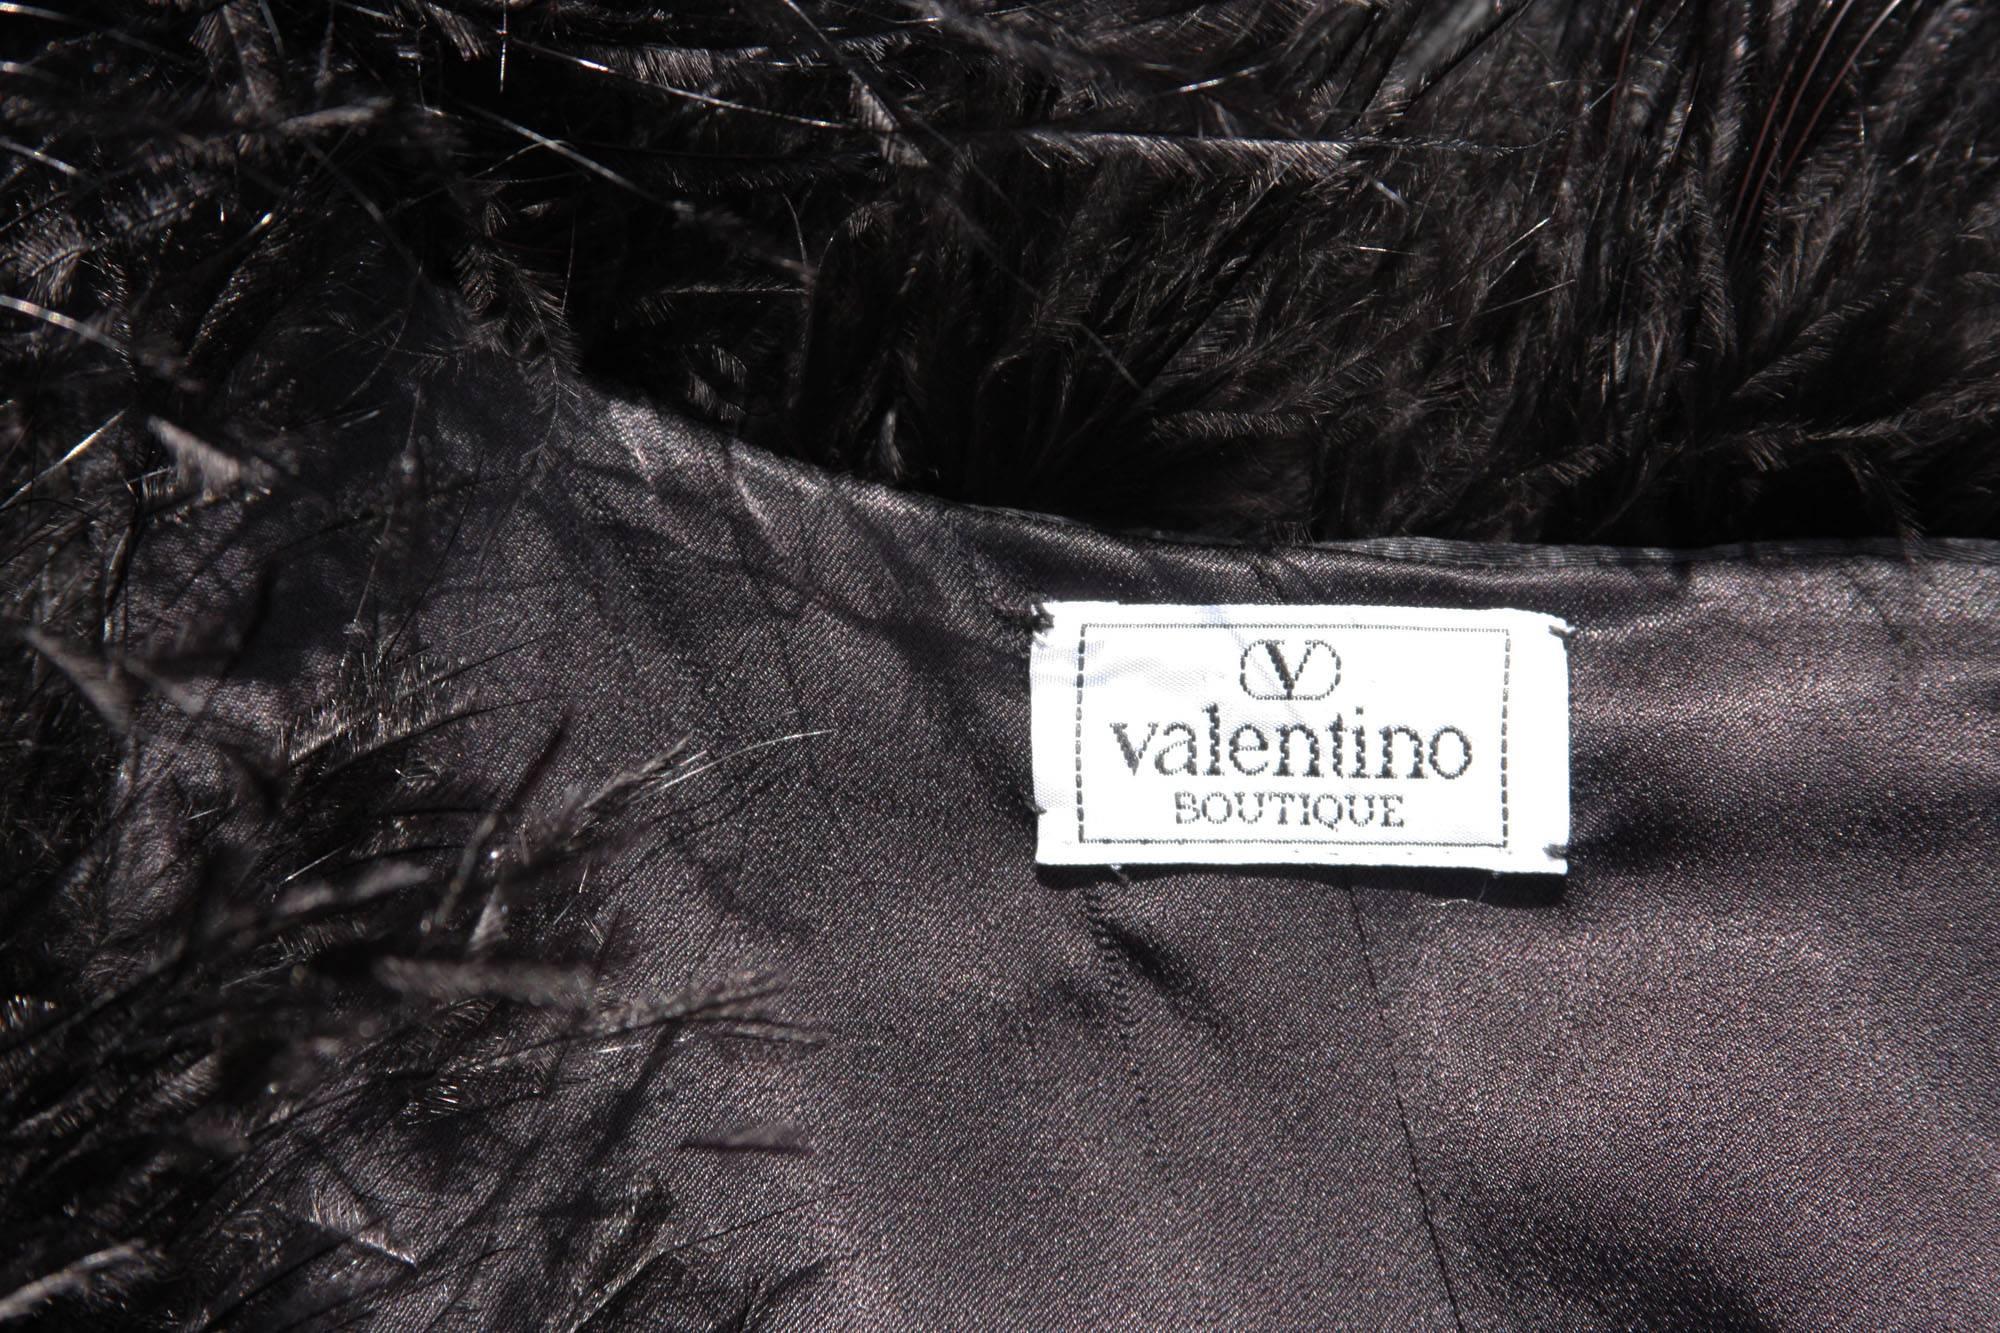 Valentino Boutique 80's Silk Taffeta Feathers Black Gown 1